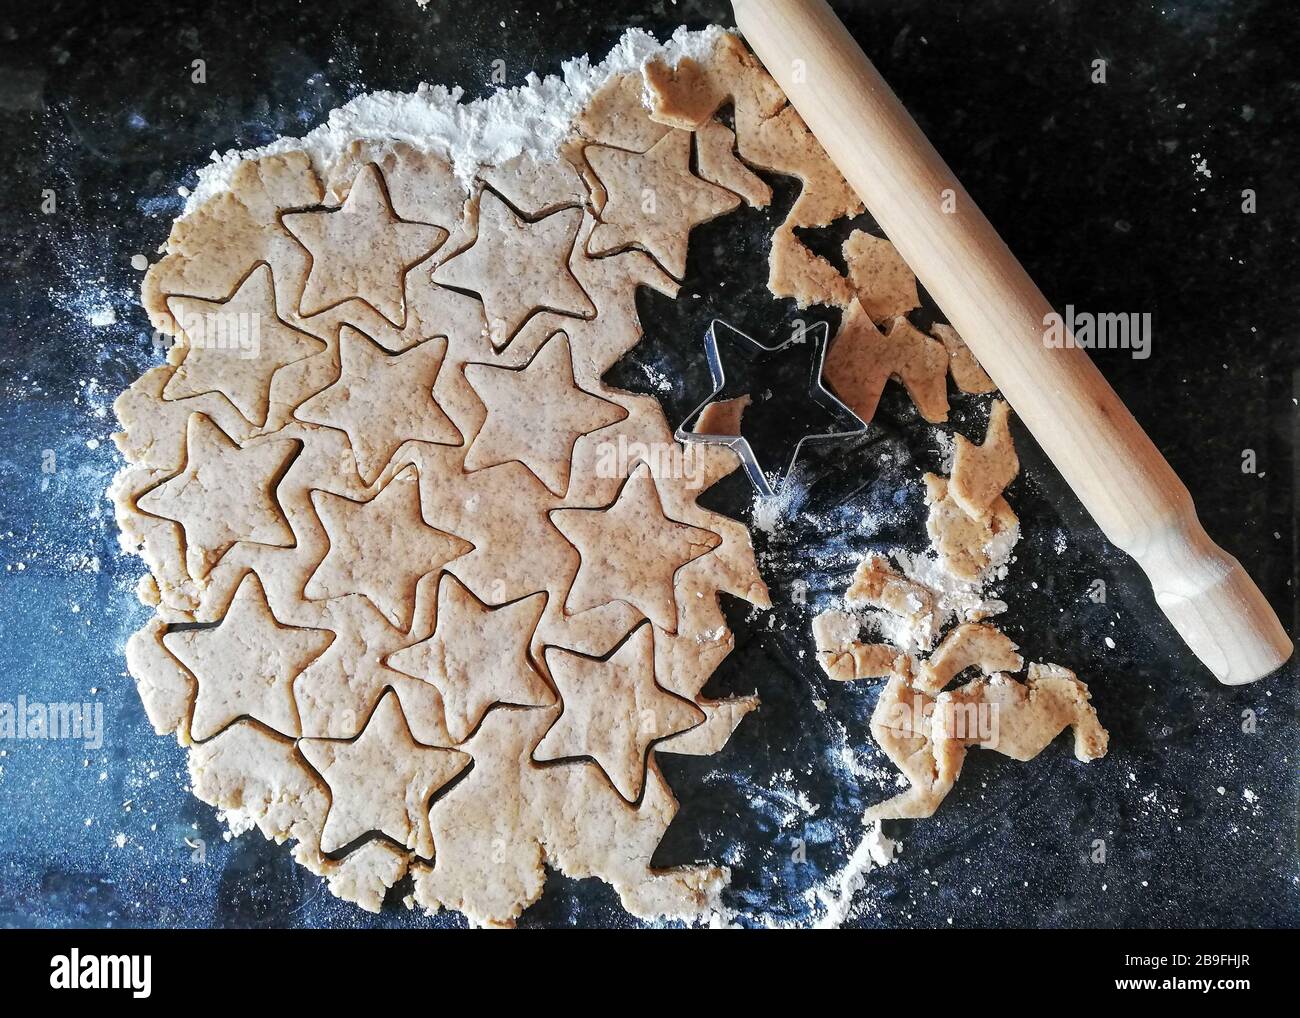 Home baking Stock Photo